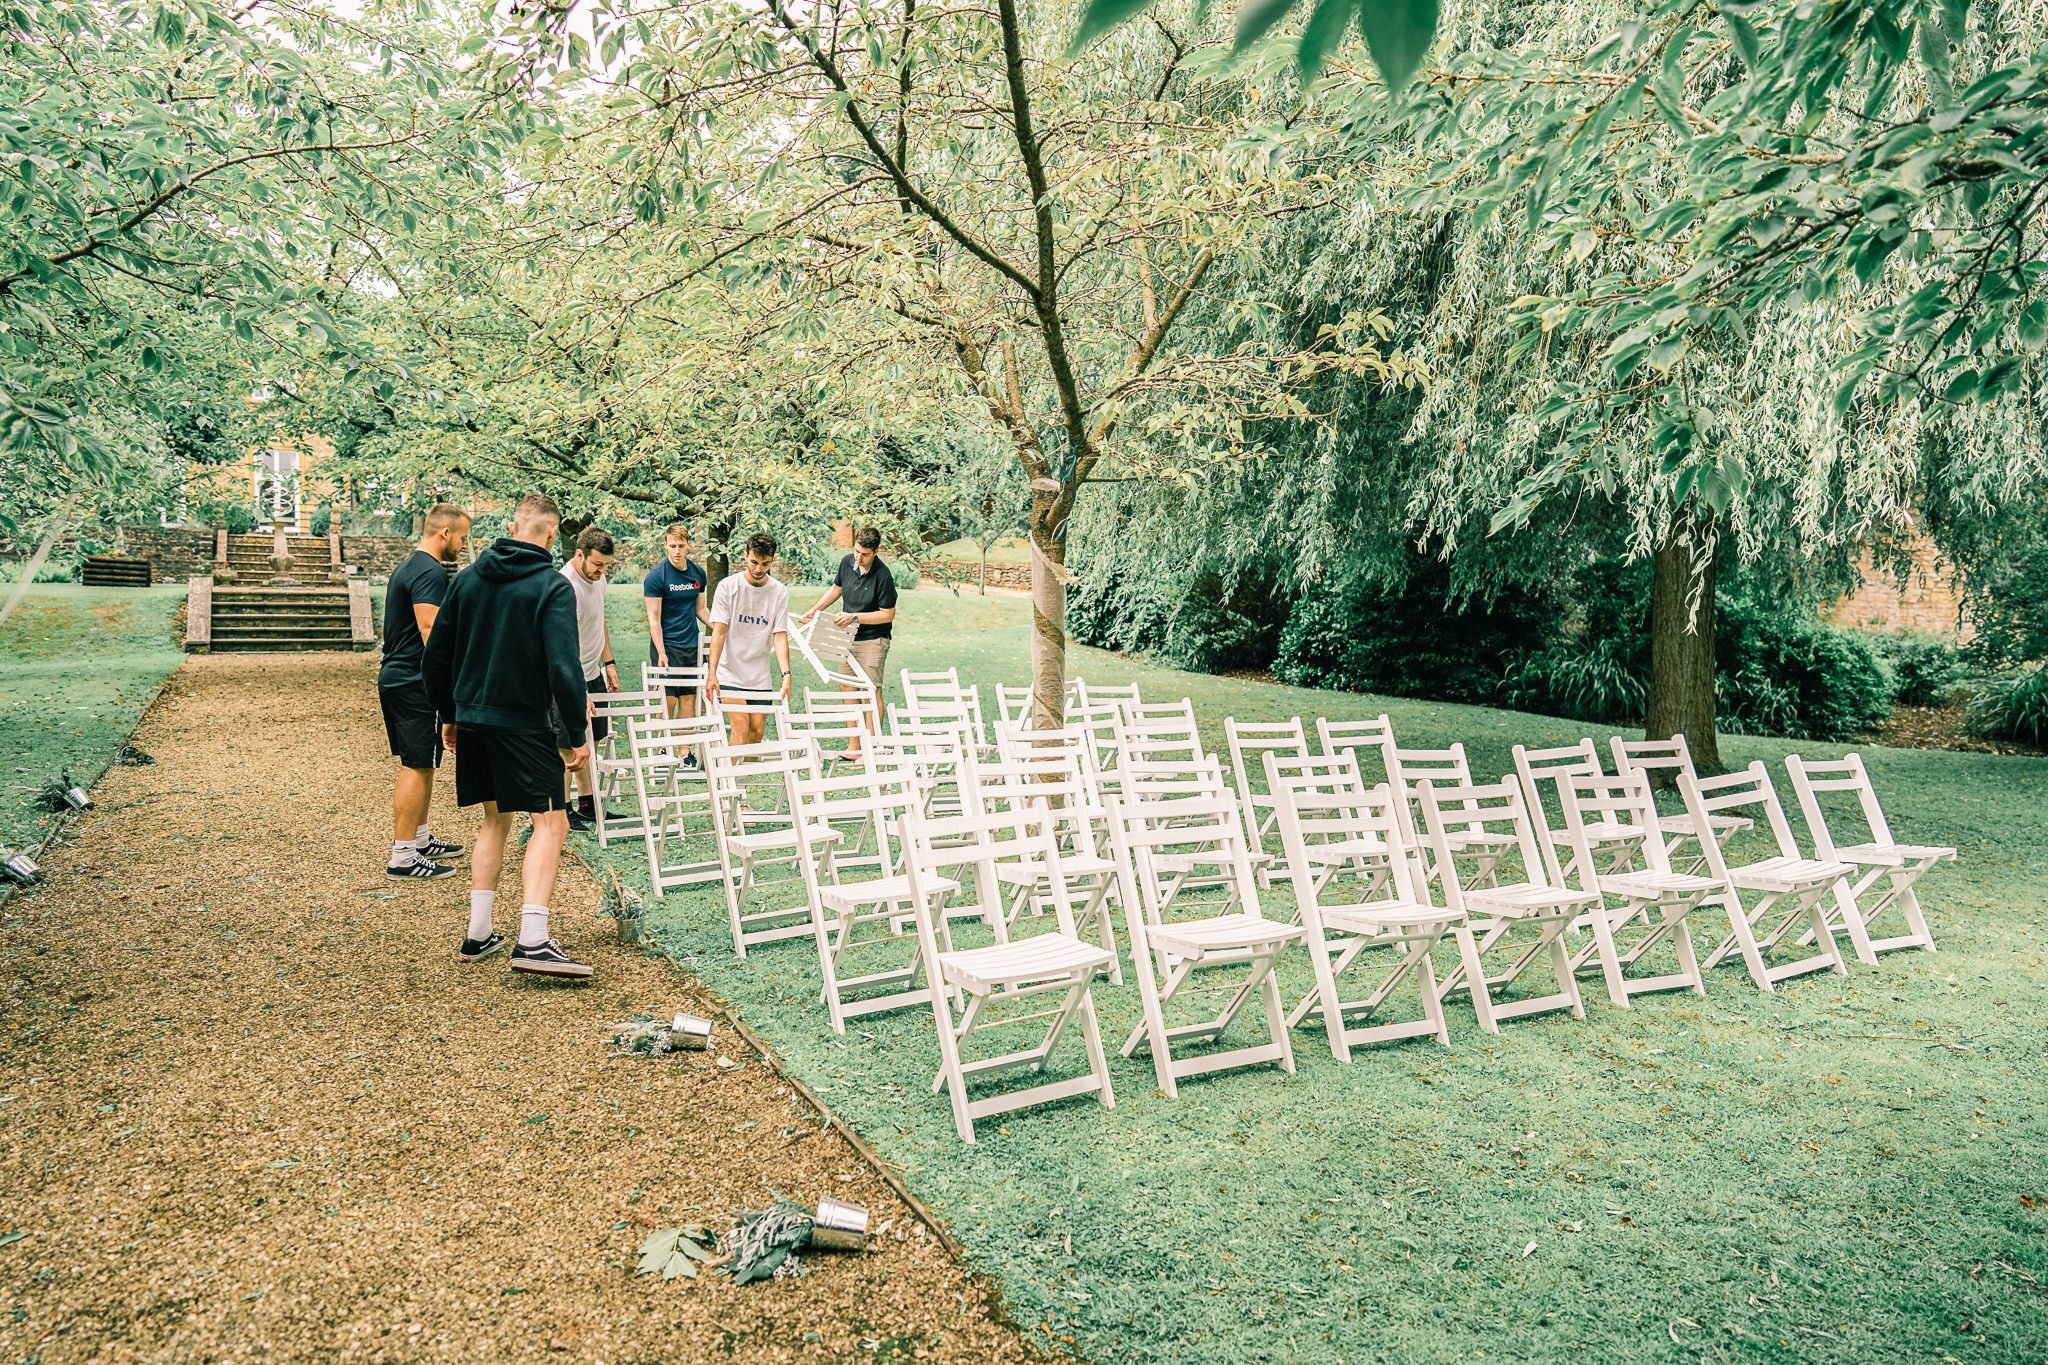 Charlie & Toby's wedding at Lanes, in Somerset, UK 1 (30).JPG